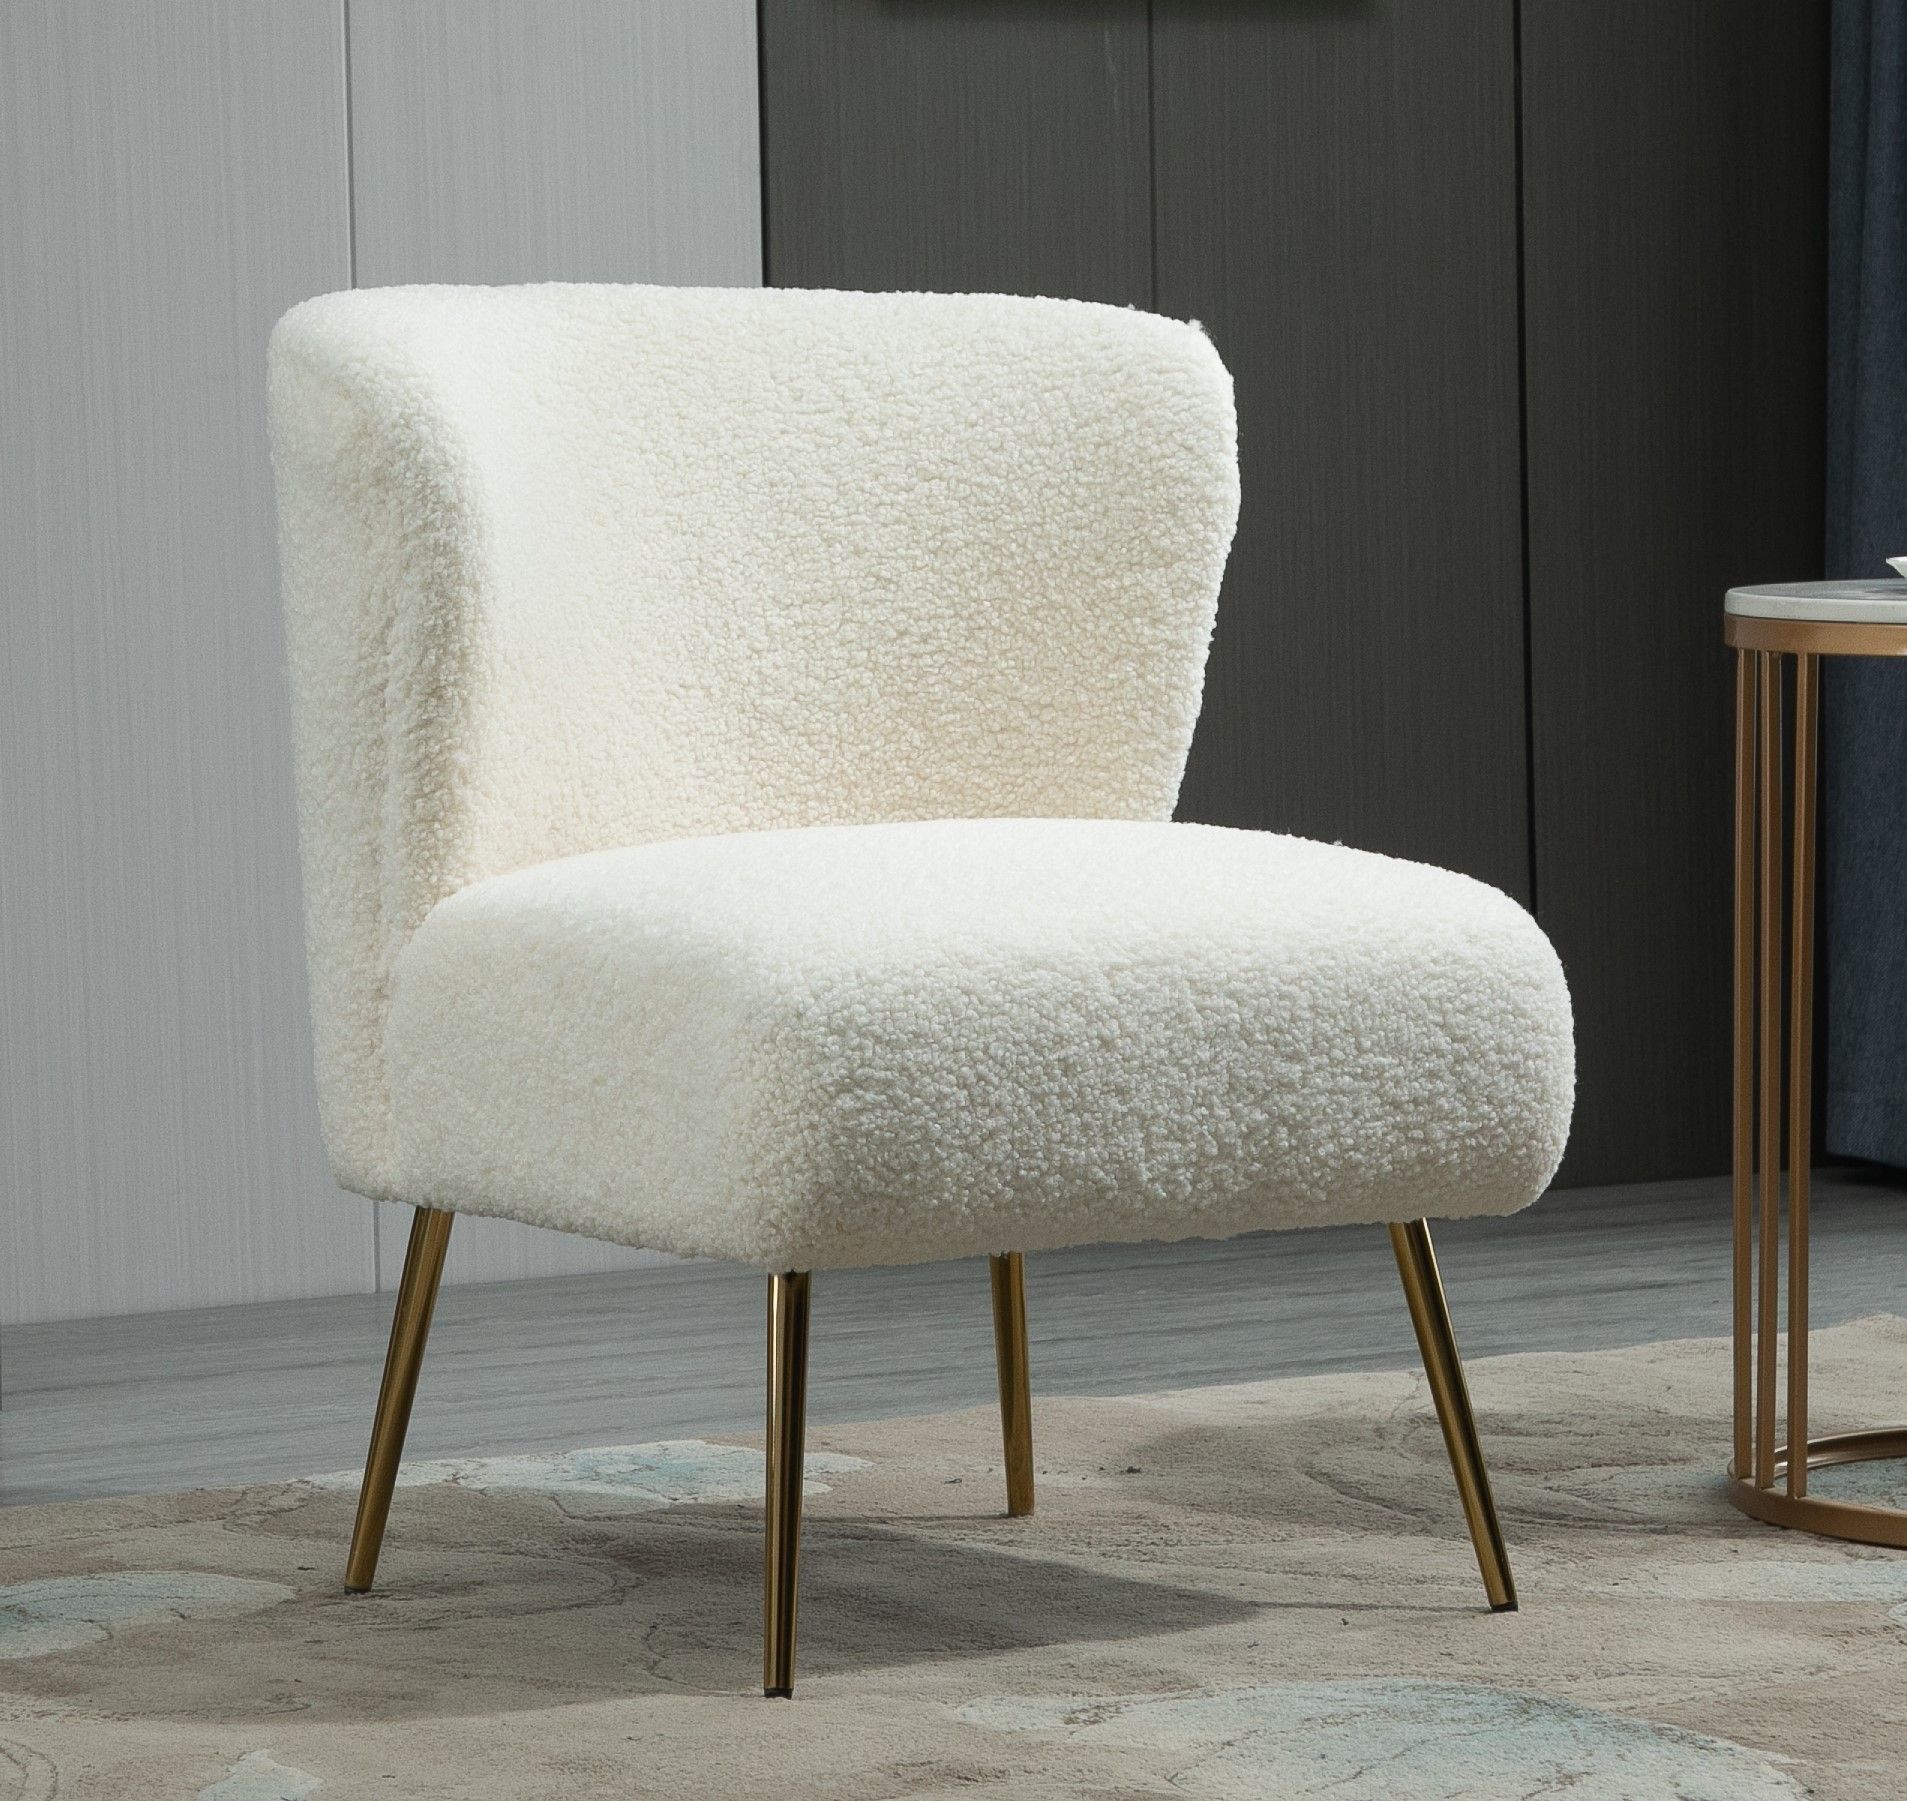 Imitation Lamb Skin Occational Chair Accent Chair Slipper Chair Golden Legs